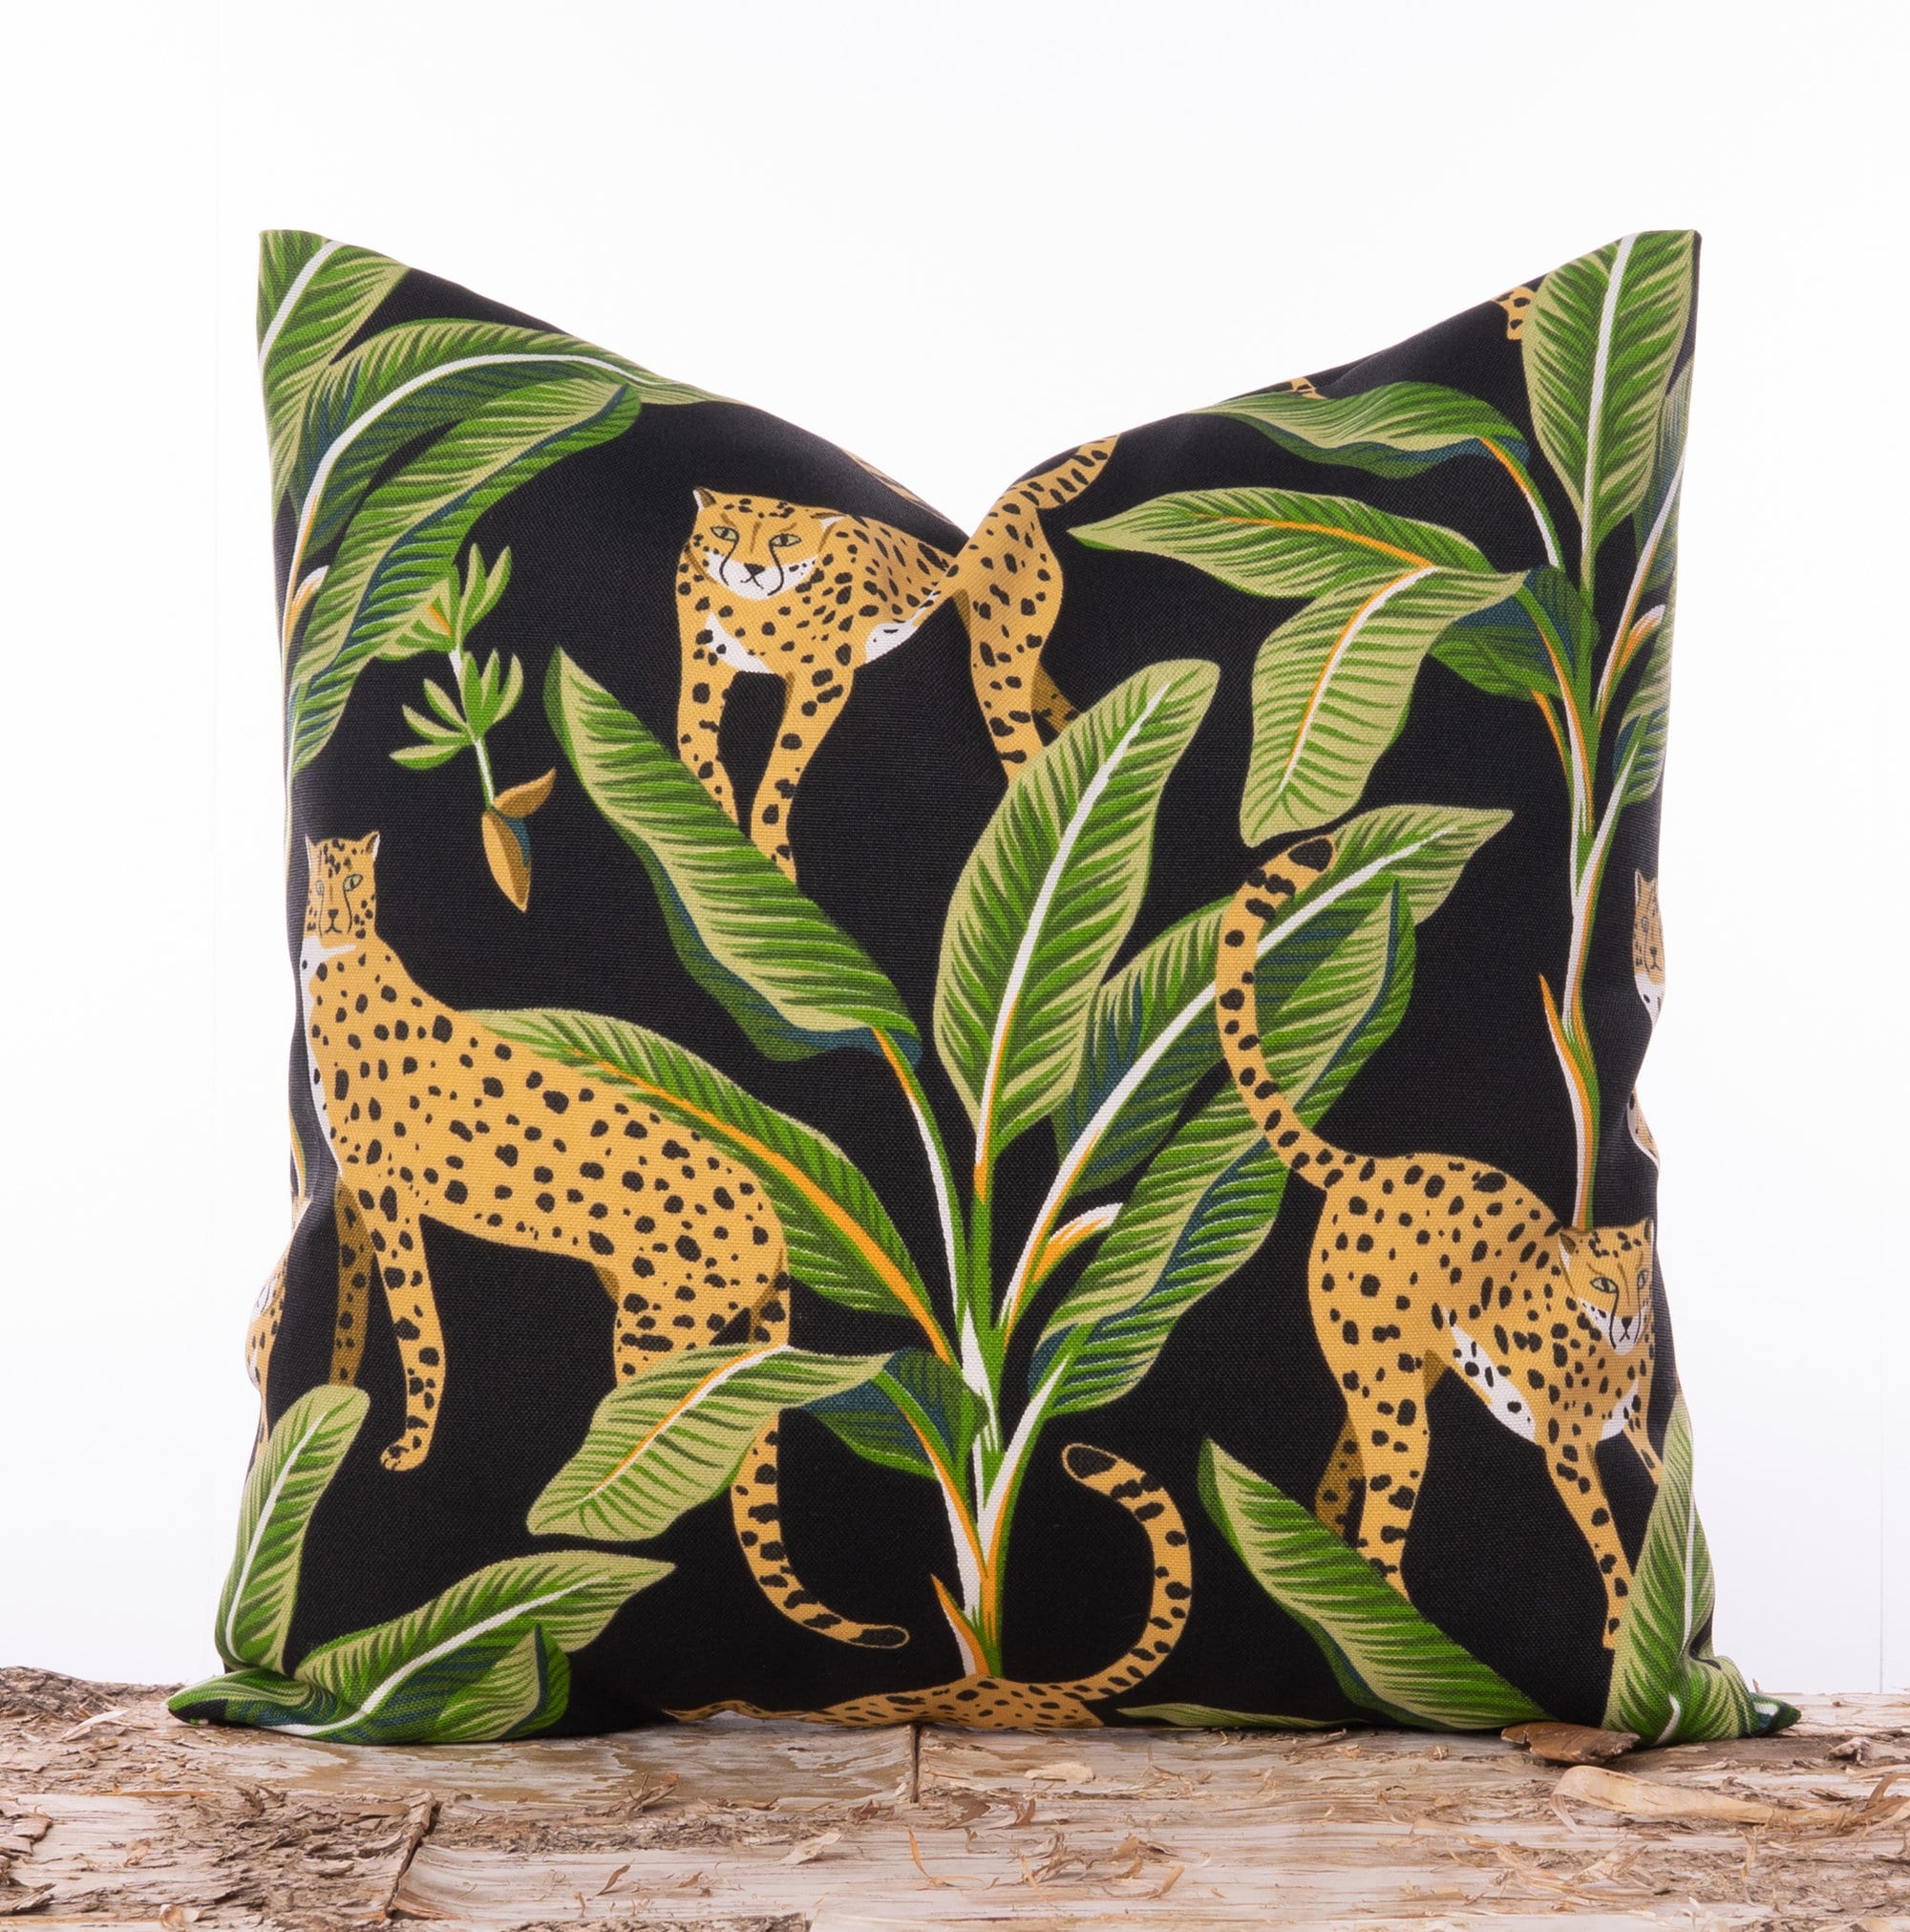  jejeloiu Leopard Print Throw Pillow Covers 20x20 Set of 2  Soft Cheetah Pillow Cases Cushion Covers for Boys Girls Teens Animal Print  Decor Pillow Cases Cushion Covers Women Men Safari Cushion